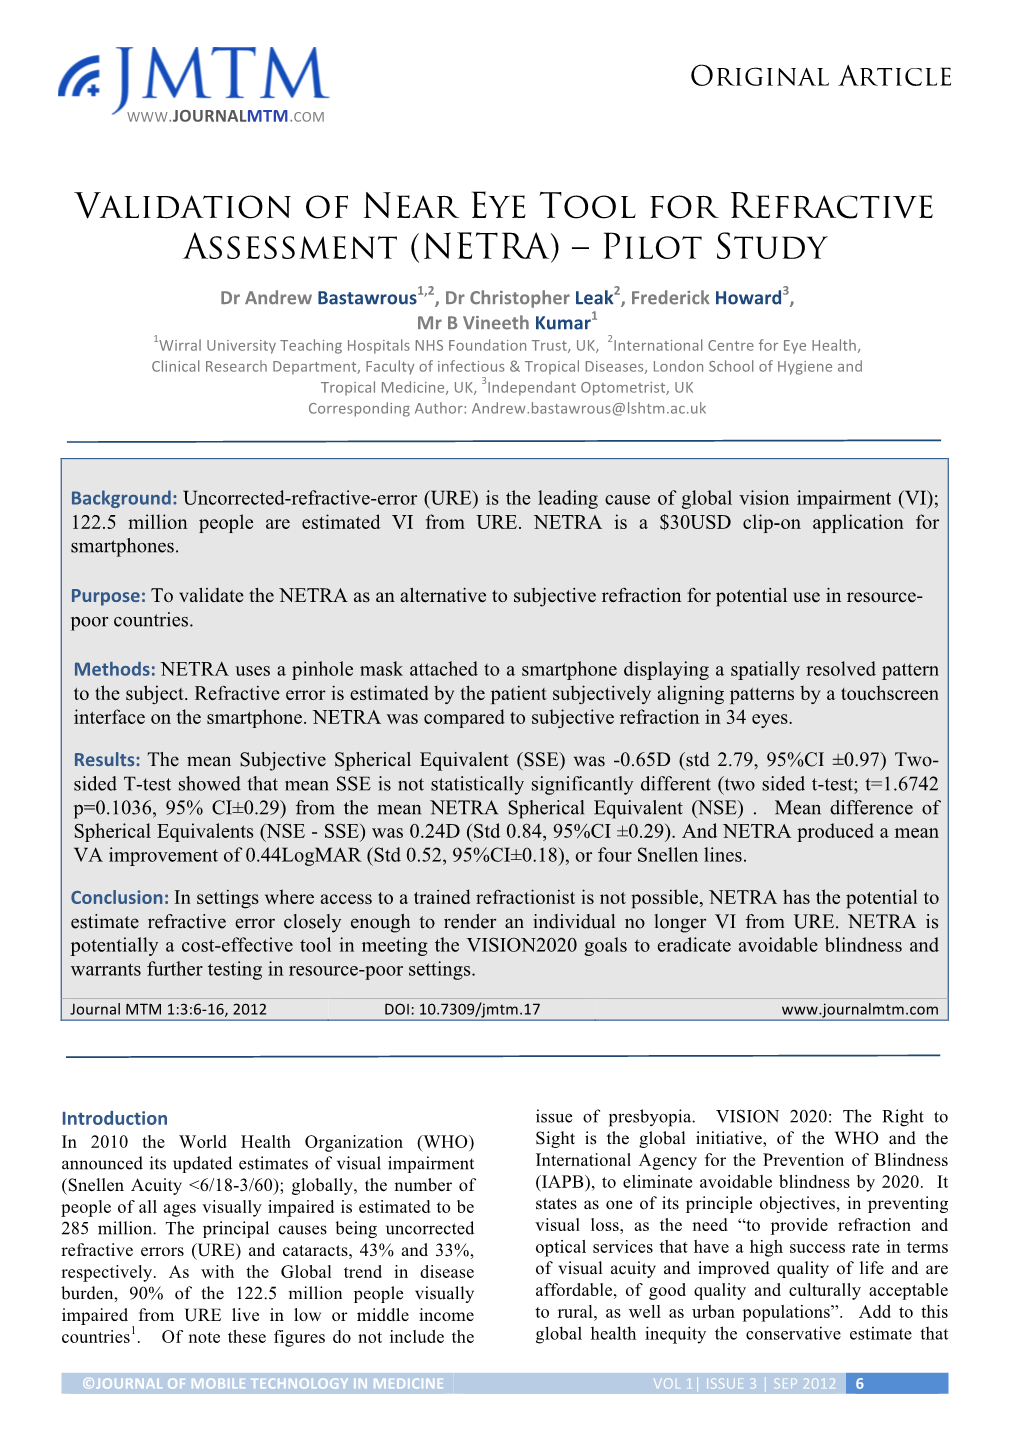 Validation of Near Eye Tool for Refractive Assessment (NETRA) – Pilot Study